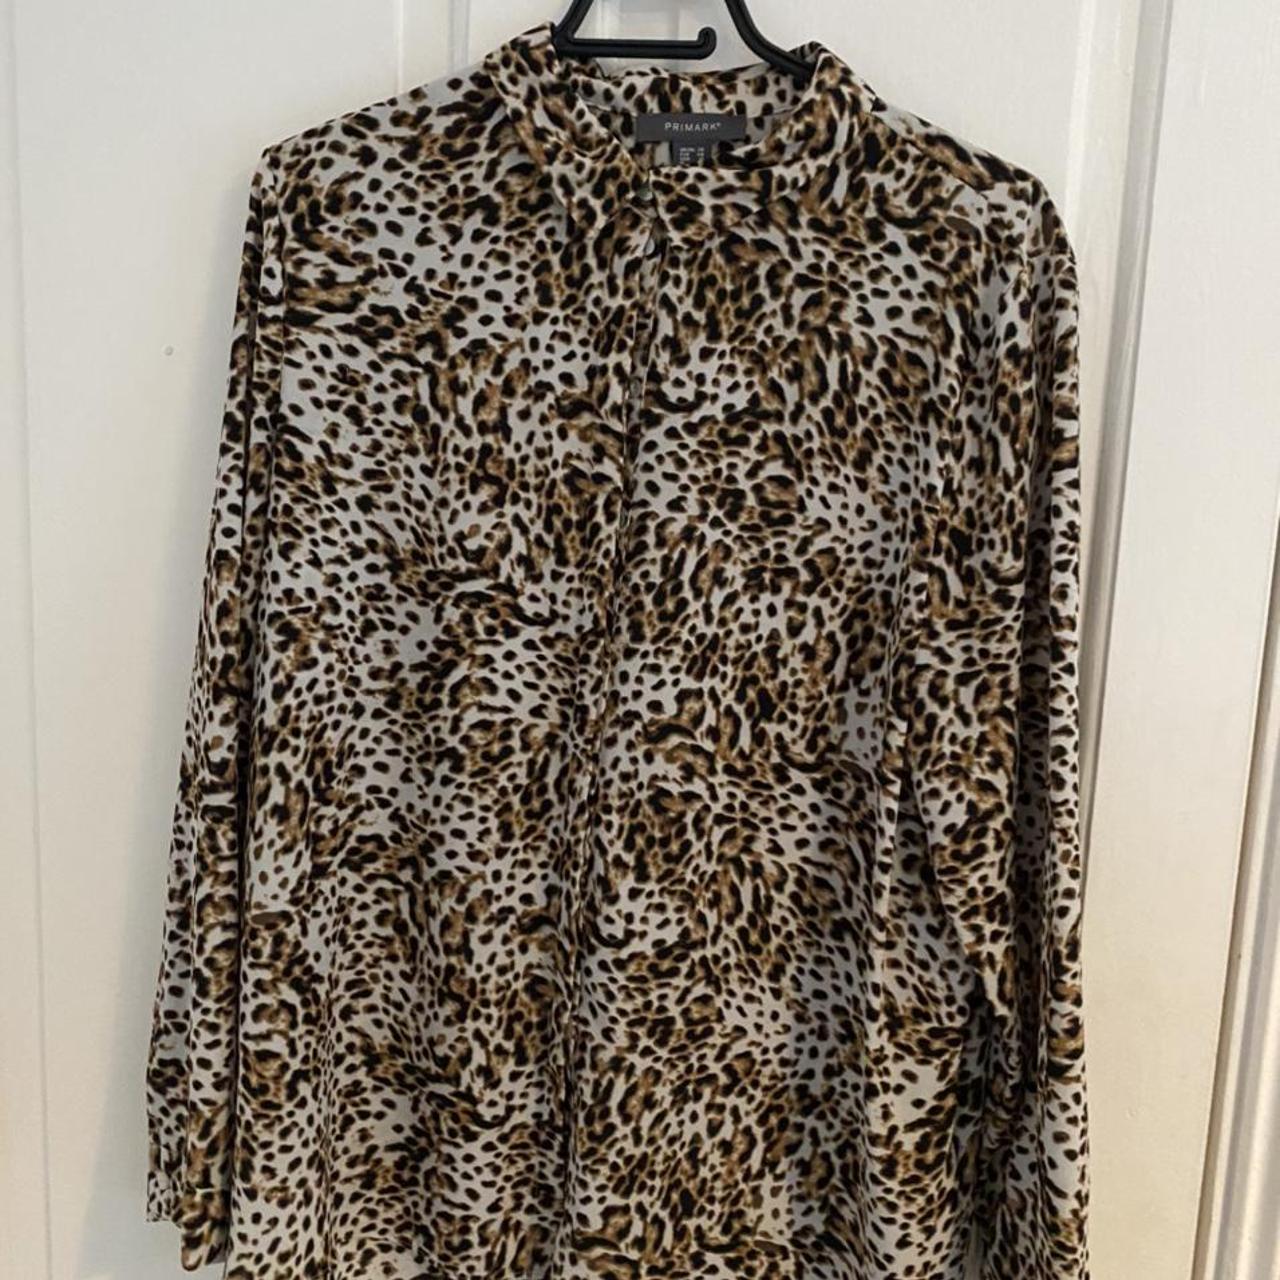 Leopard Print Primark Shirt - Depop